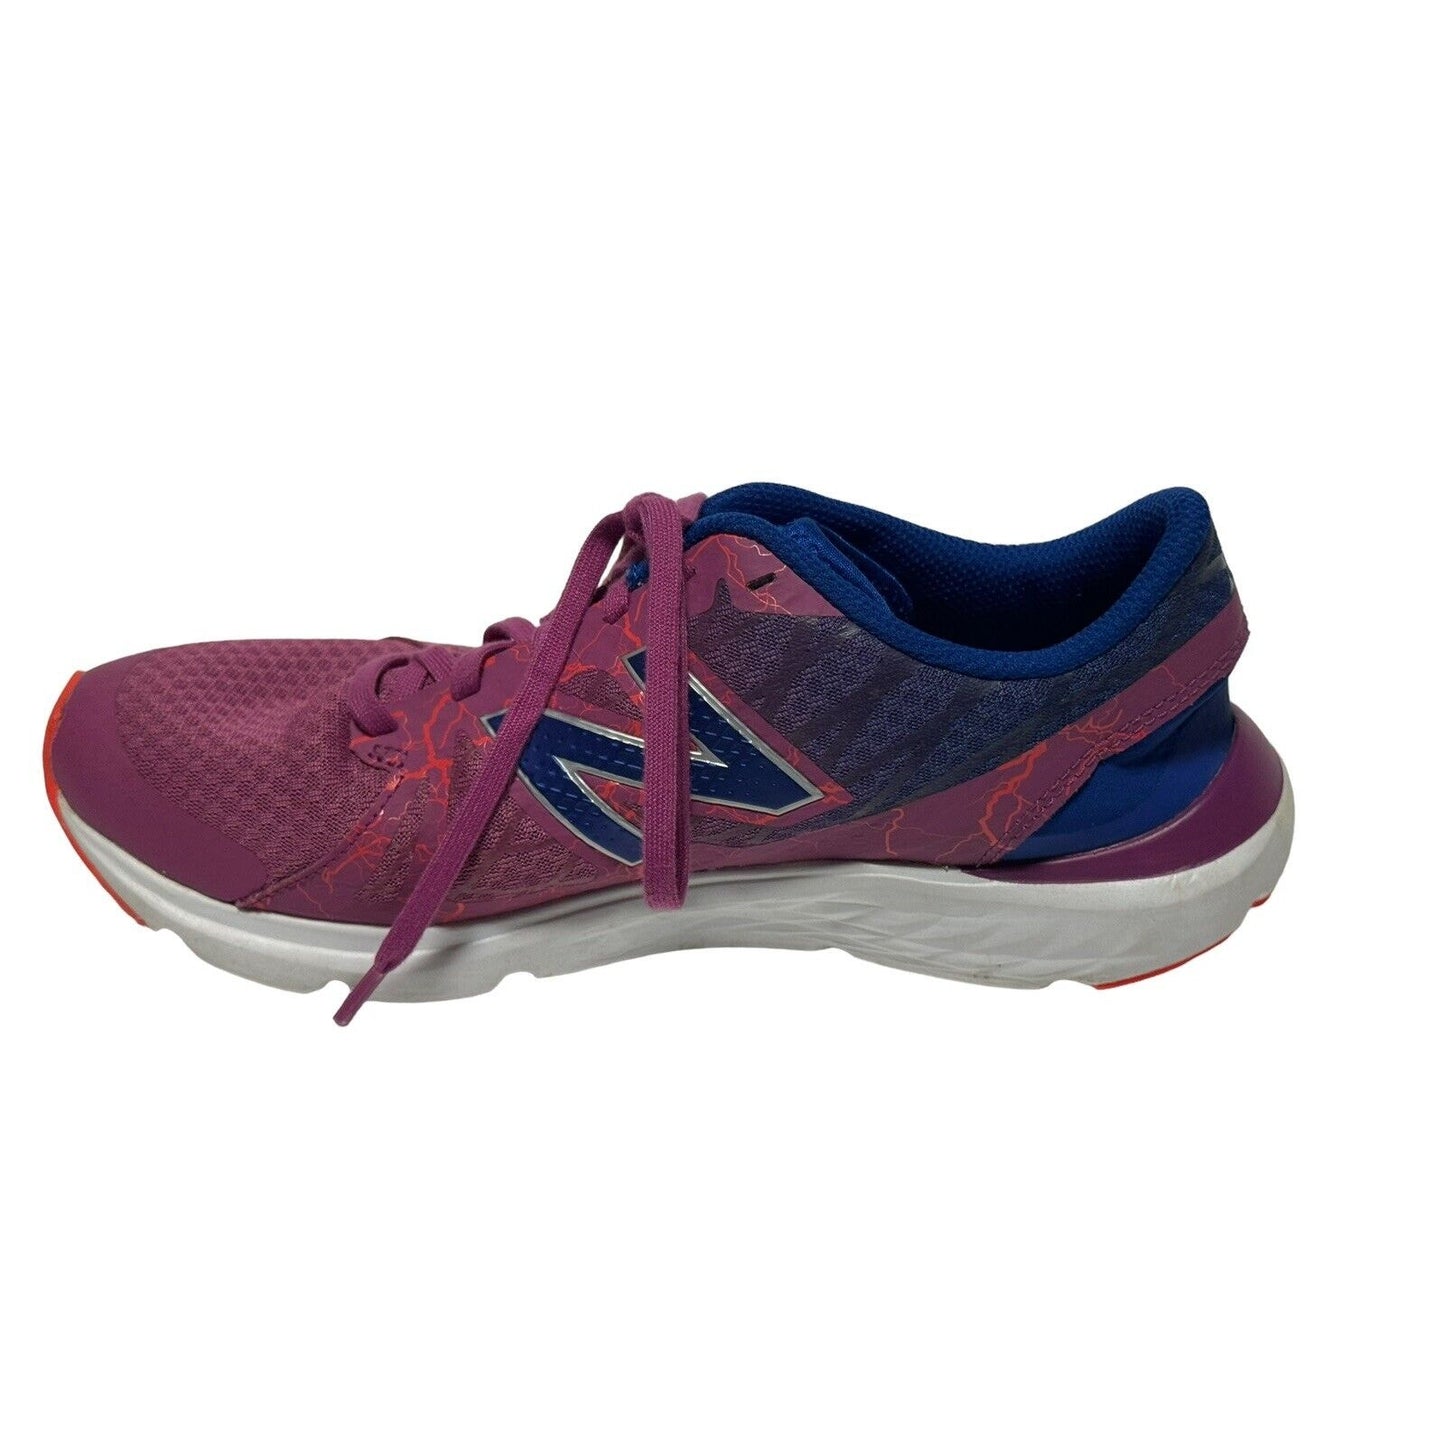 New Balance Women's W690V4 Running Shoe Speed Ride Size 9 W690LF4